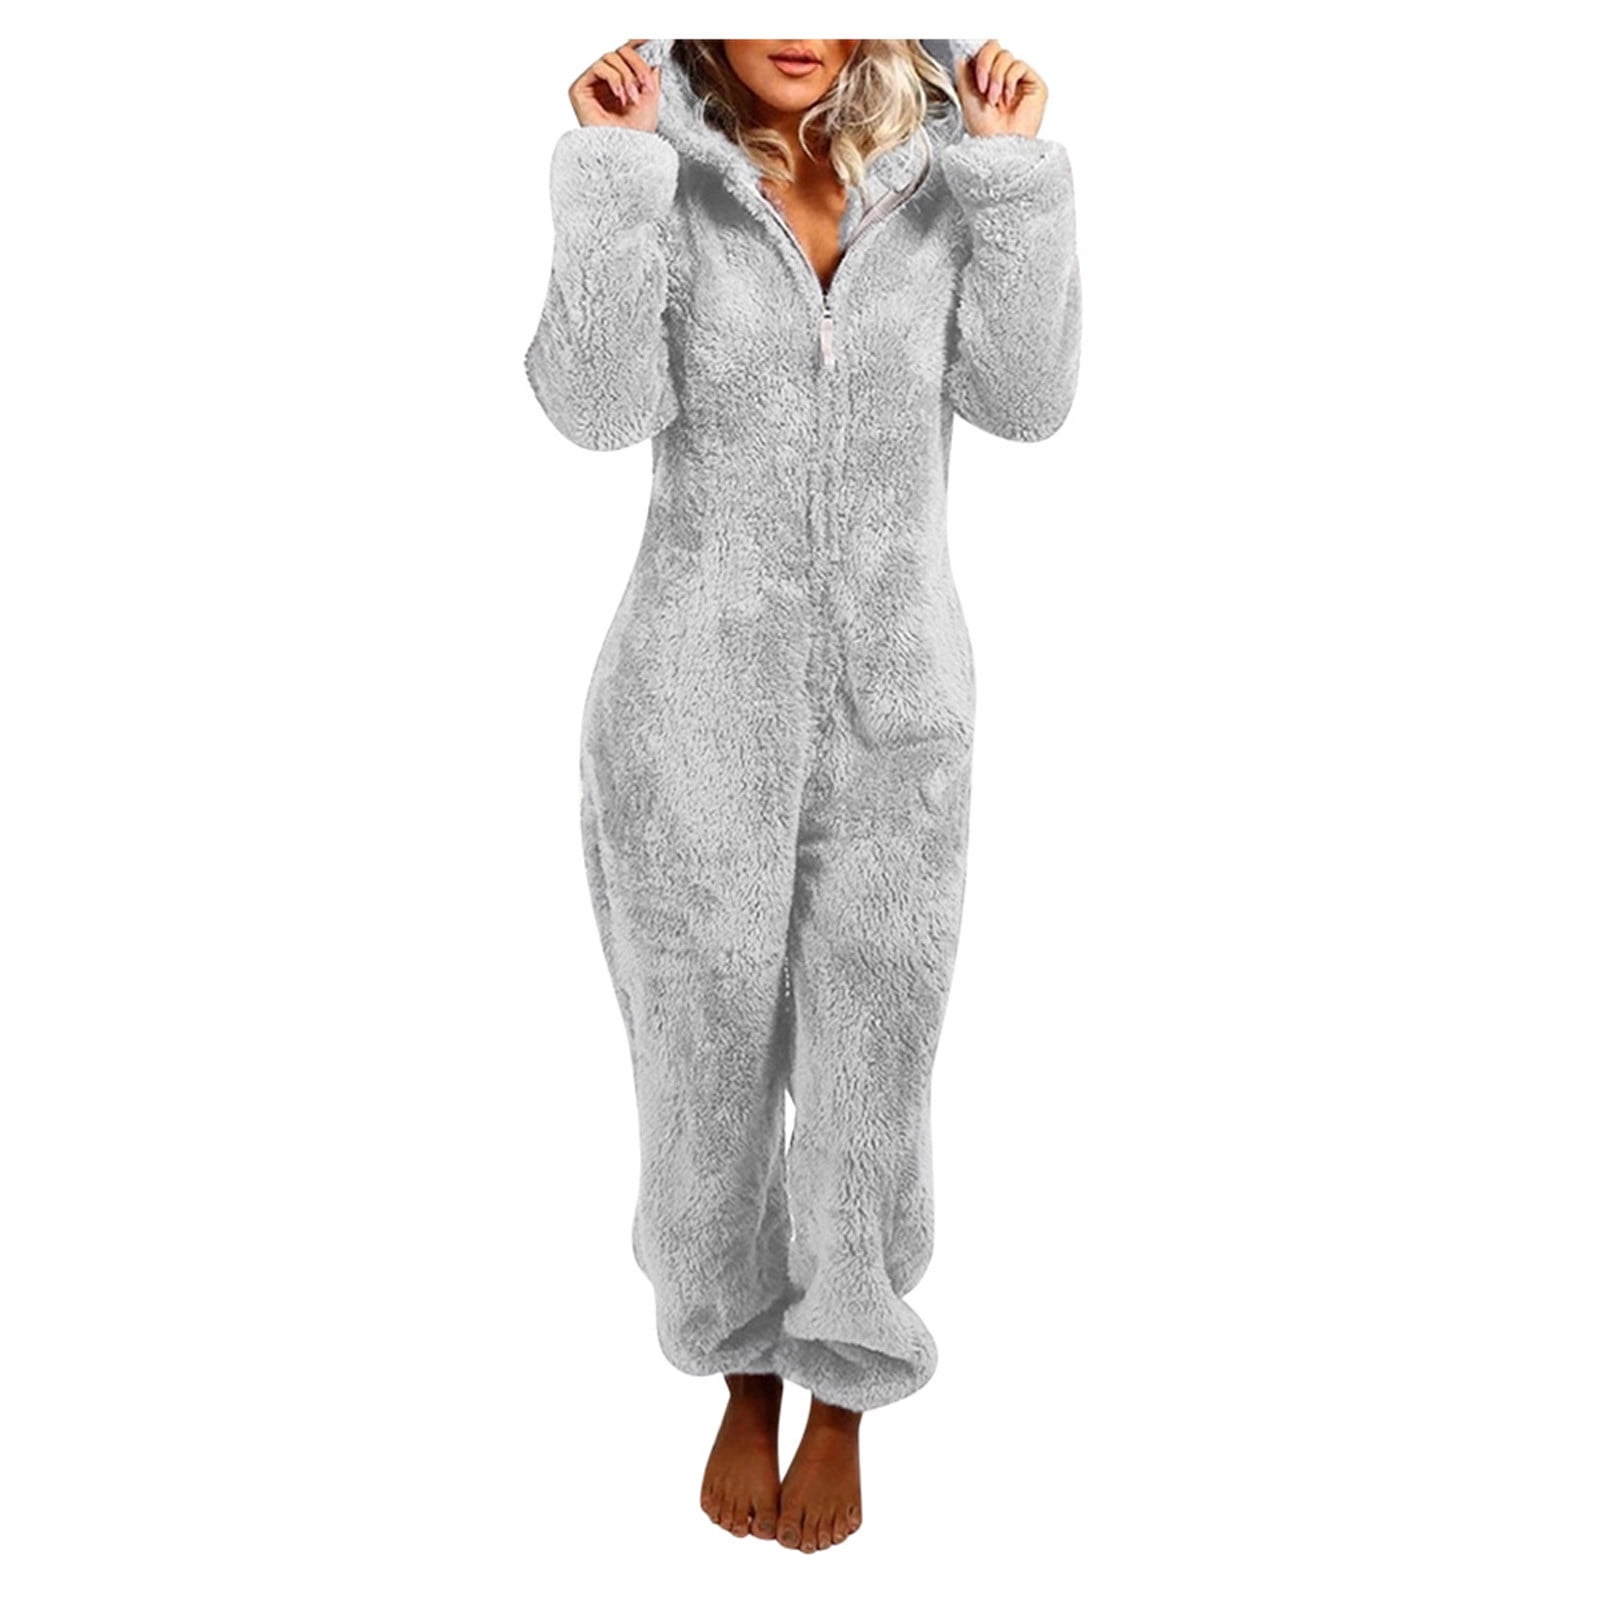 Coral Fleece Pajamas for Women Winter Warm Onesie Hooded Romper ...